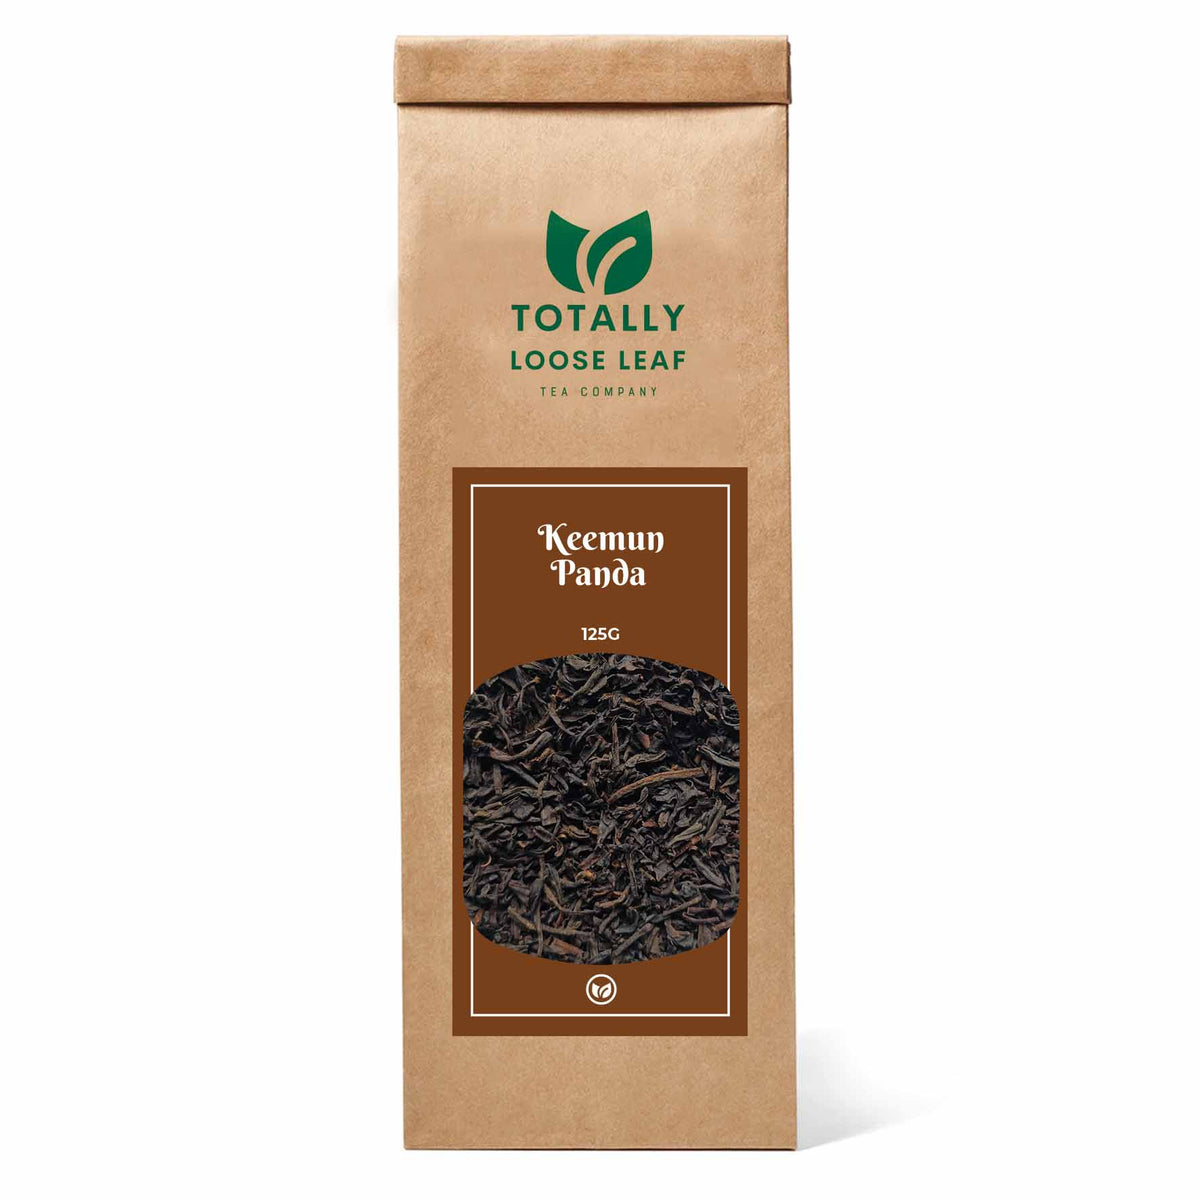 Keemun Panda Black Loose Leaf Tea - one pouch